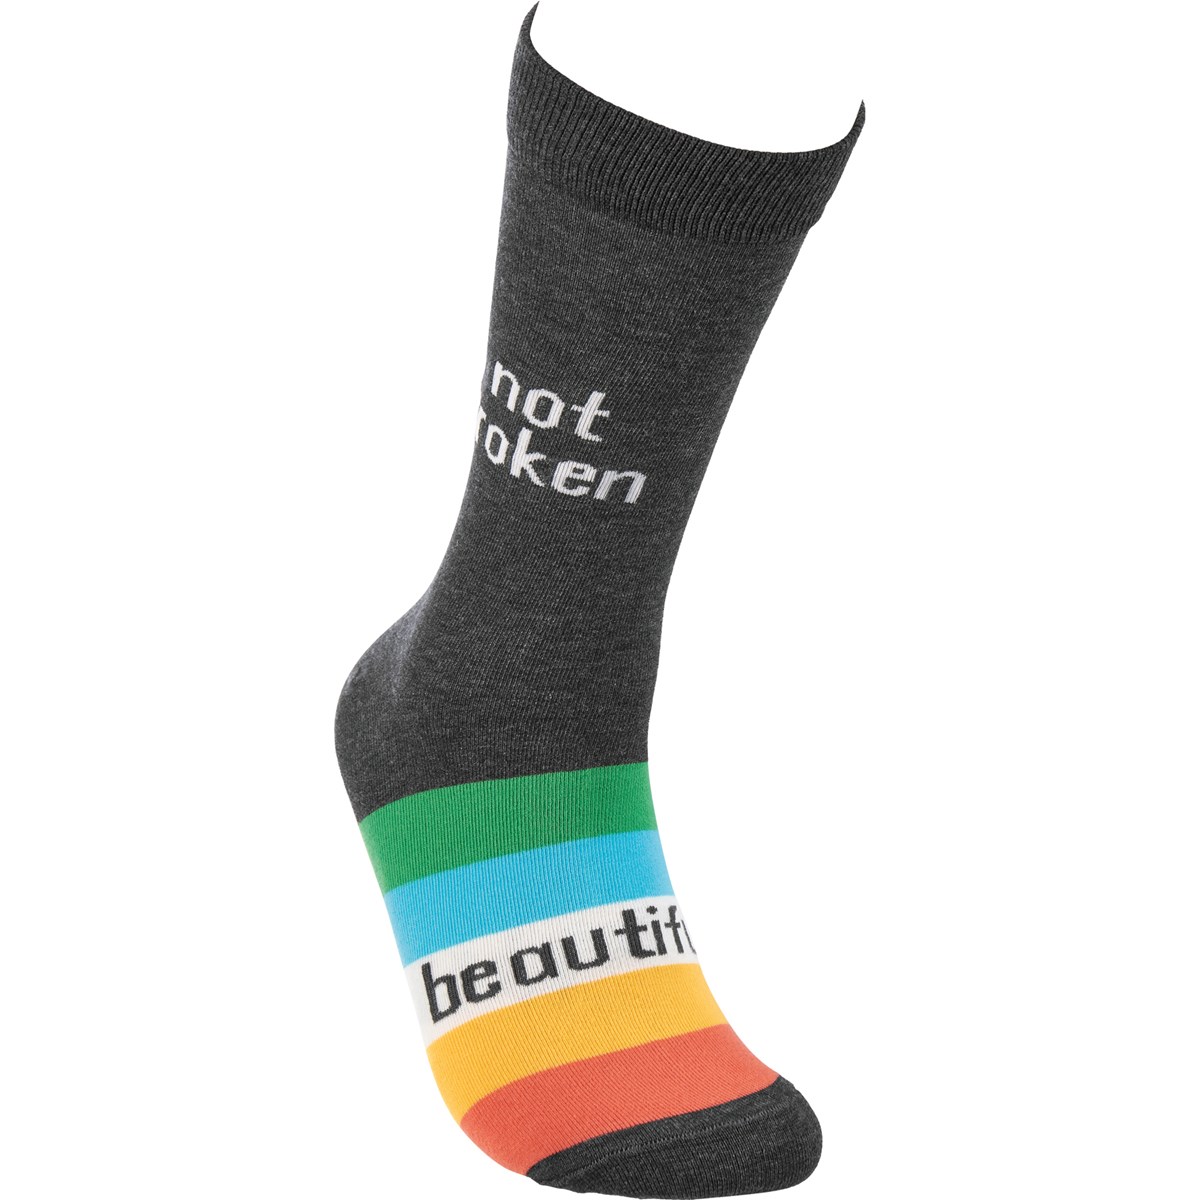 Socks - Not Broken Beautiful - One Size Fits Most - Cotton, Nylon, Spandex